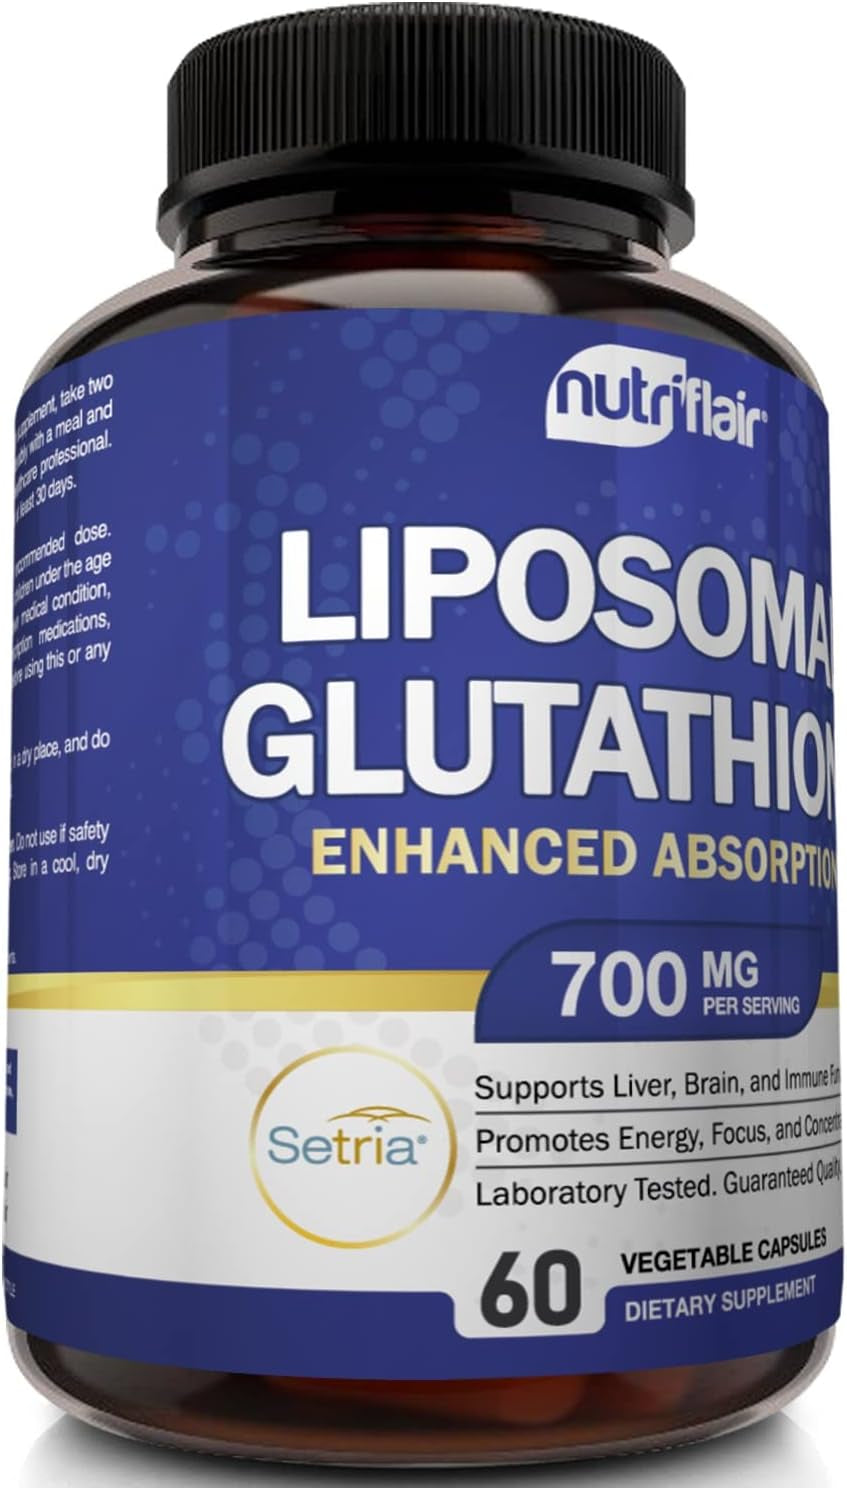 Nutriflair Liposomal Glutathione Supplement Setria® 700Mg - Pure Reduced, Stable, Active Form L Glutathione Reductase (GSH) - Non GMO Antioxidant Support, Detox, Cardiovascular, Brain, Immune Health